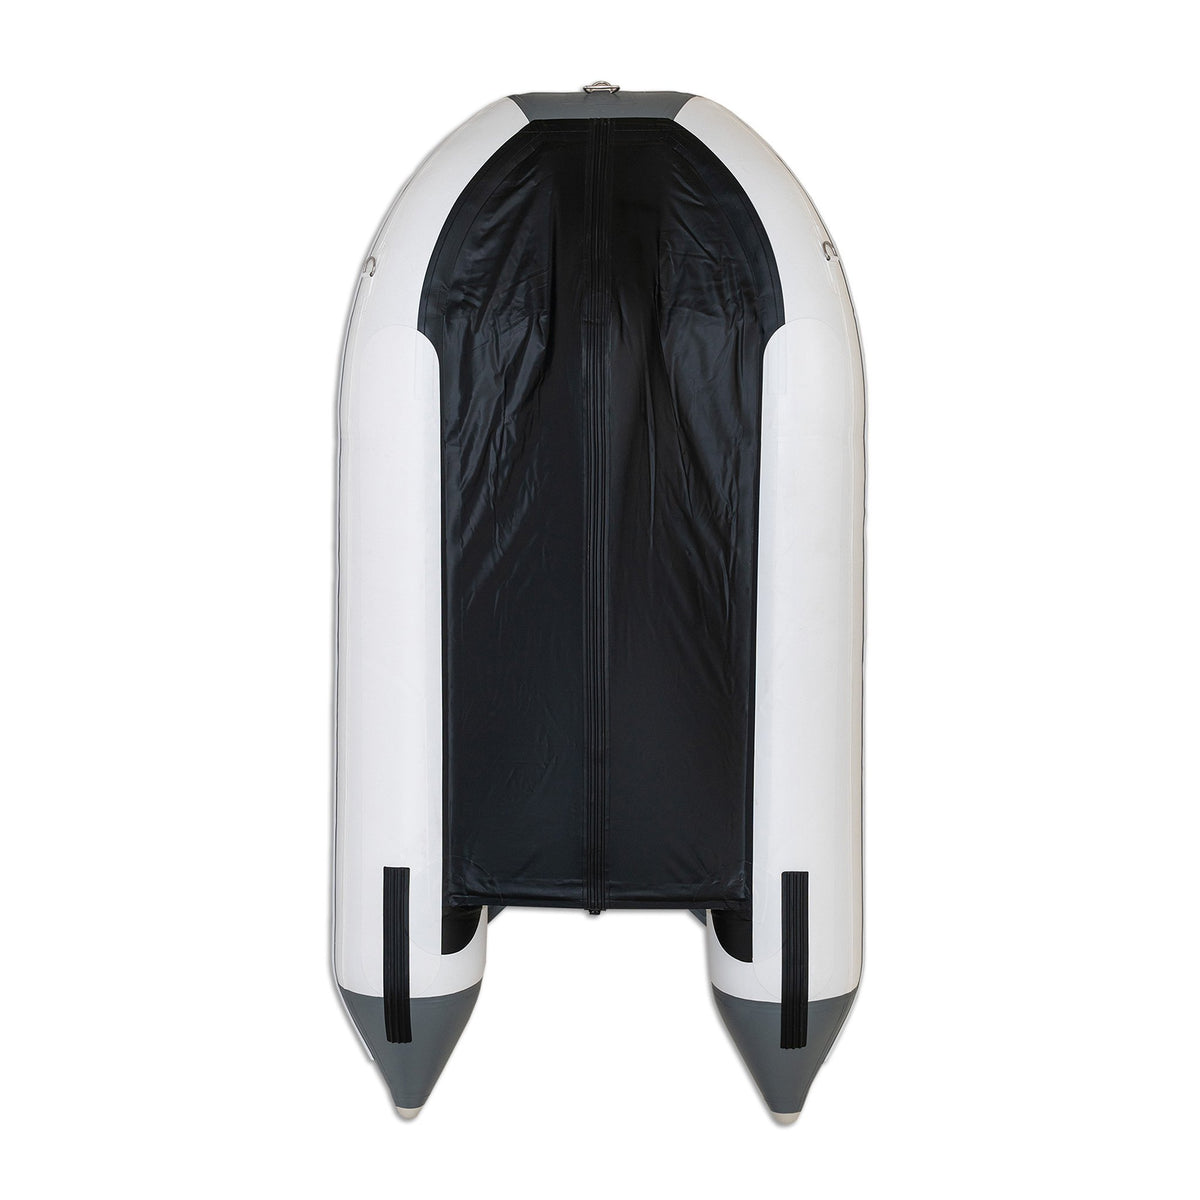 Newport Inflatable Boat - 10ft Marine Wood Floor